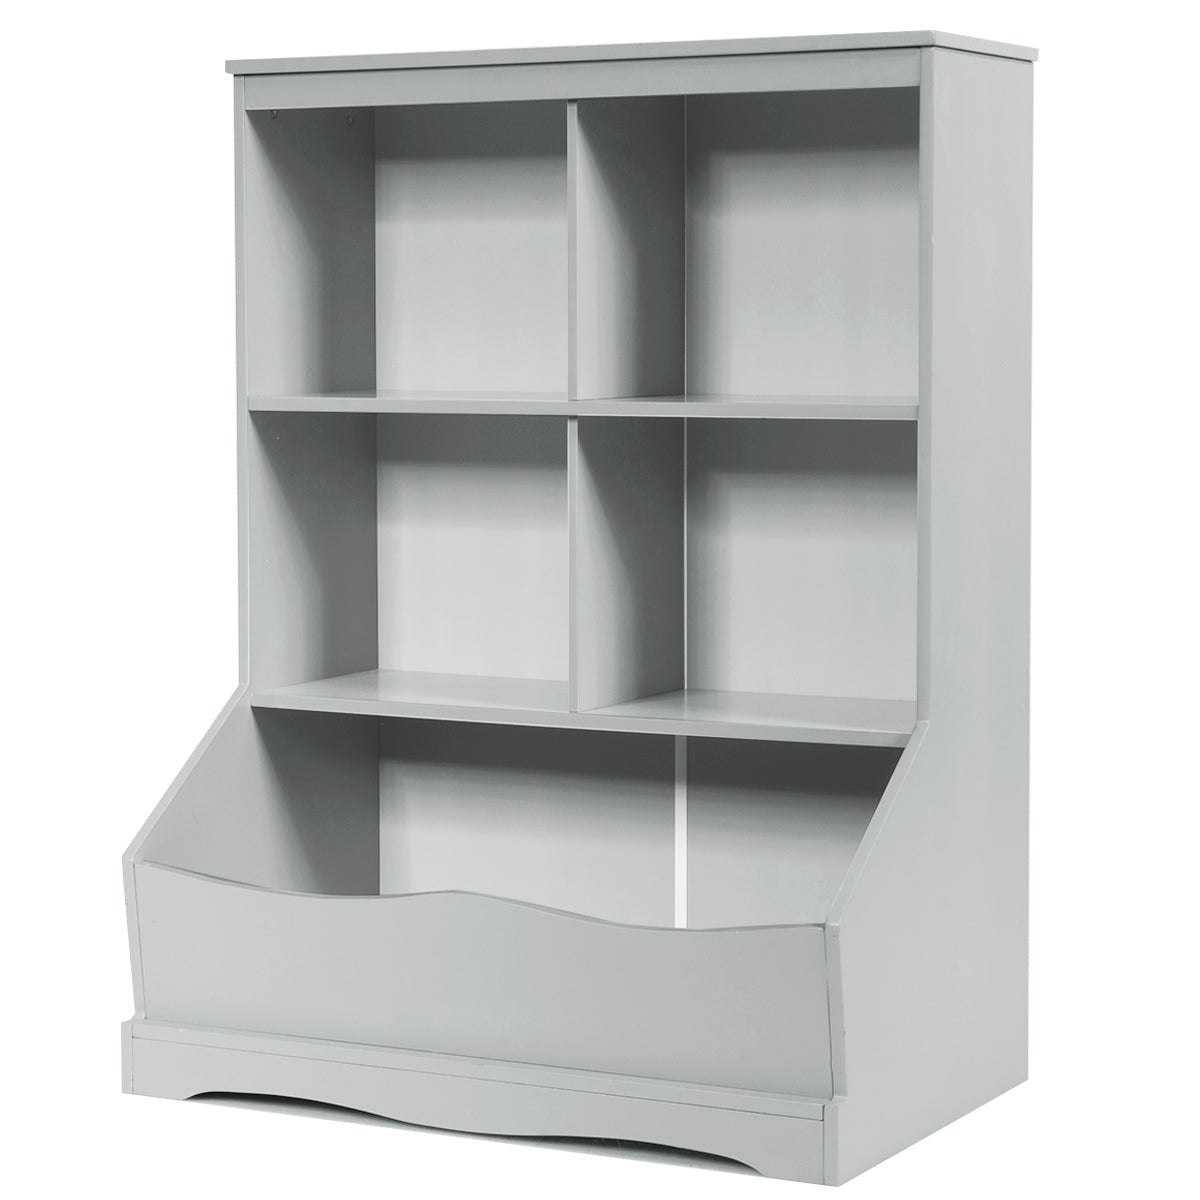 Shop Grey 3-Tier Kids Wooden Bookshelf with Spacious Storage